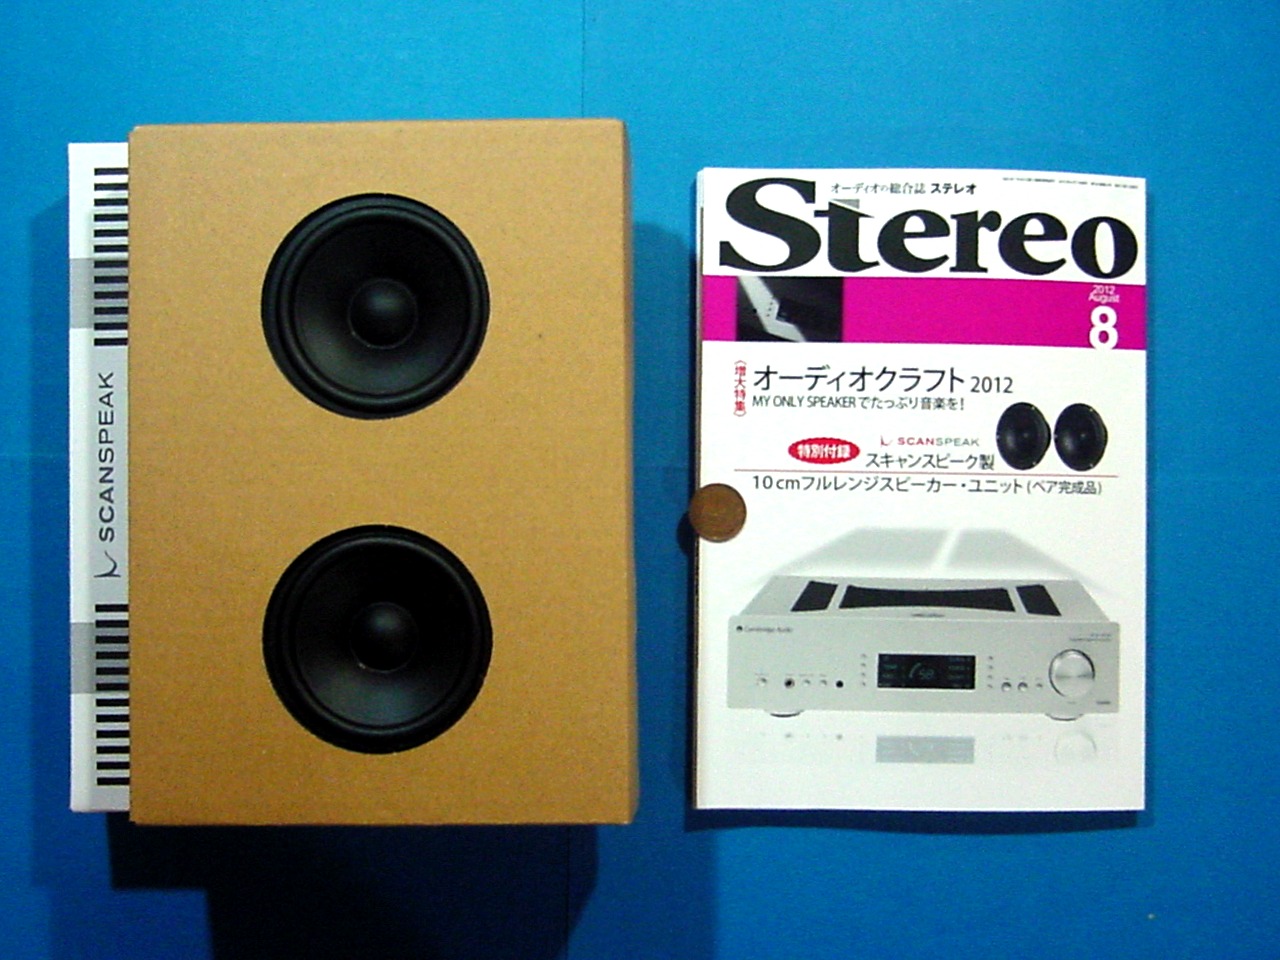 Stereo スピーカー工作の基本u0026実例集 特選スピーカーユニット - オーディオ機器